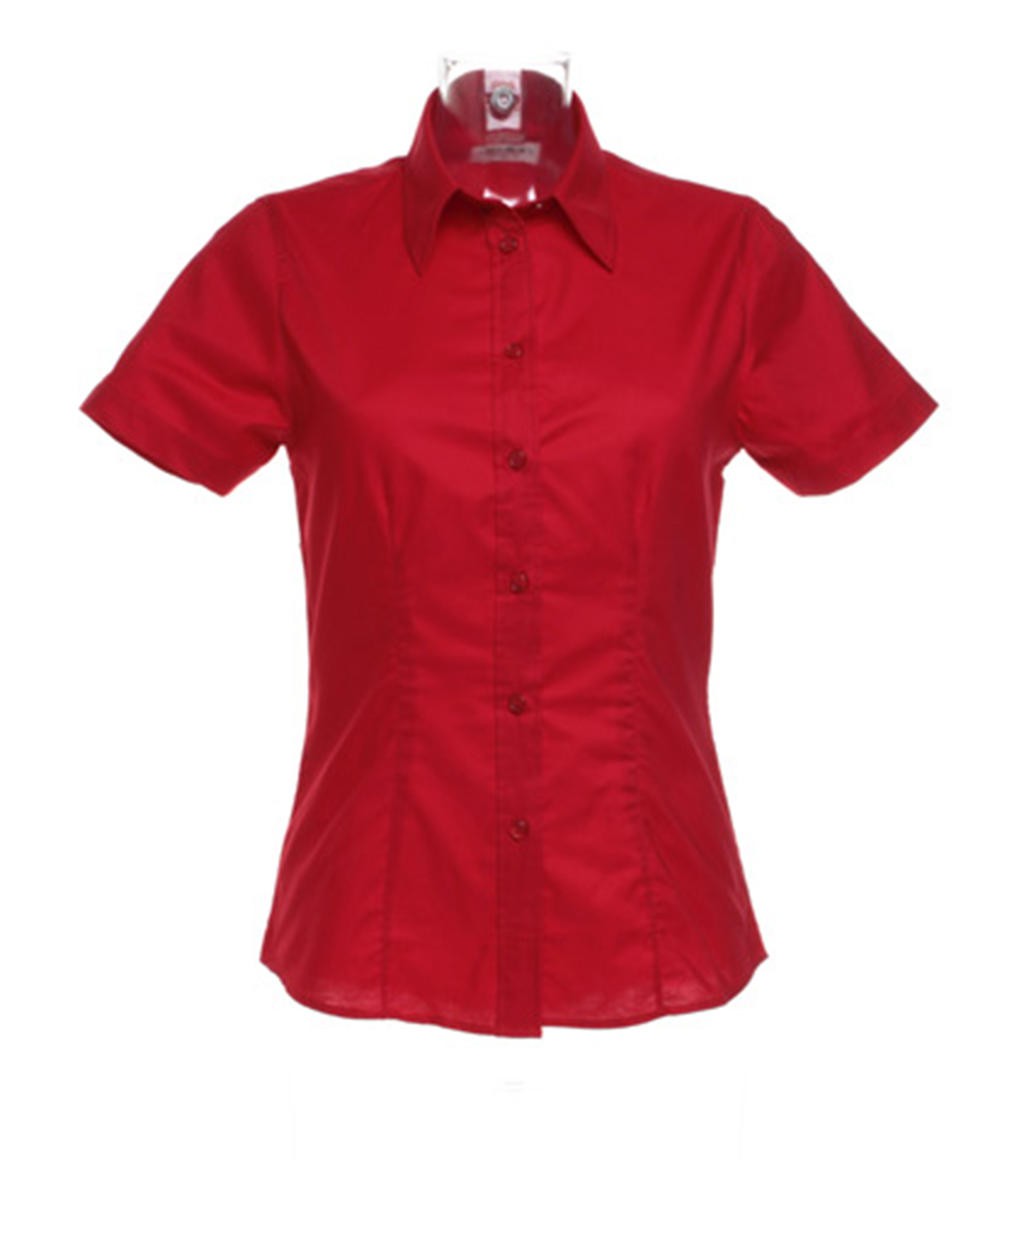 Kustom Kit Women's Tailored Fit Workwear Oxford Shirt SSL KK360